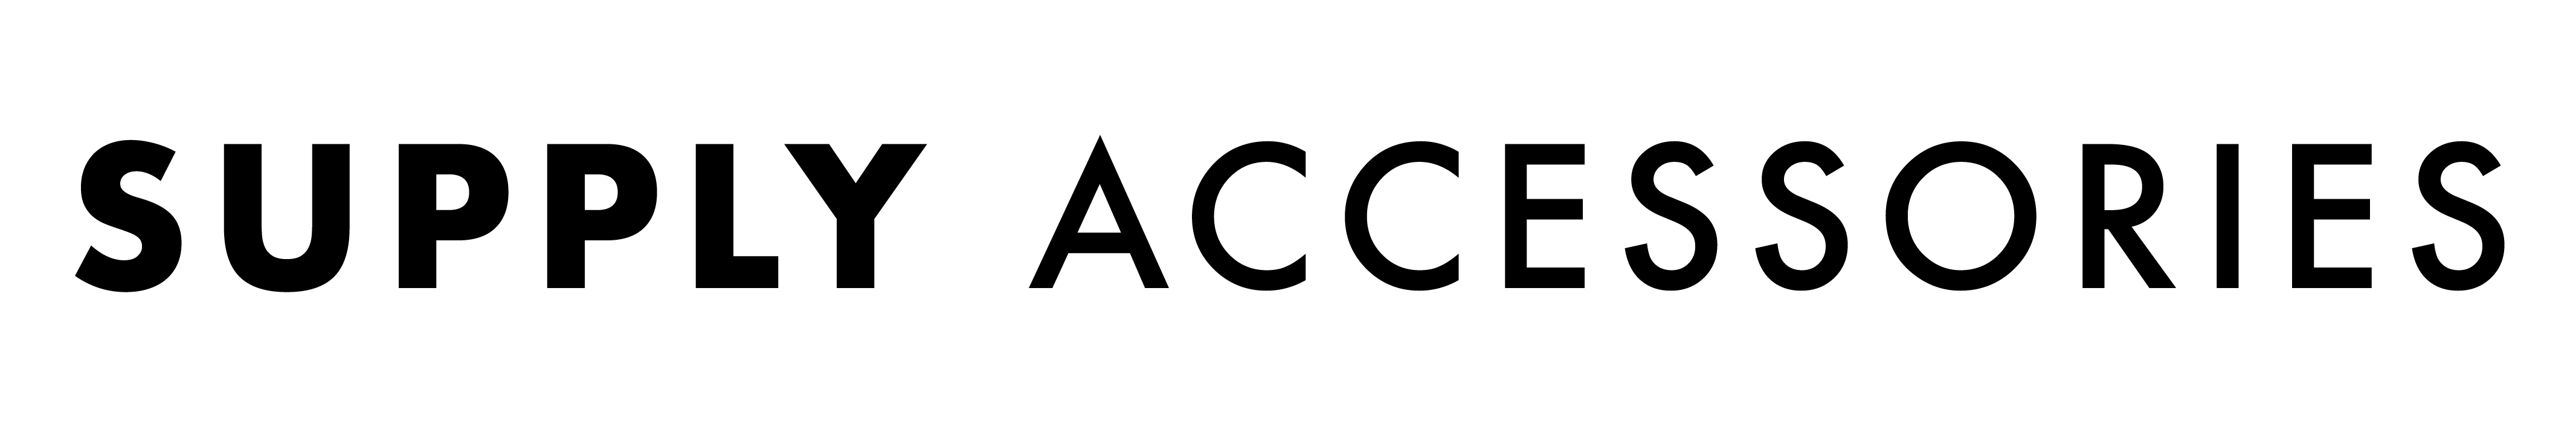 Supply Accessories logo